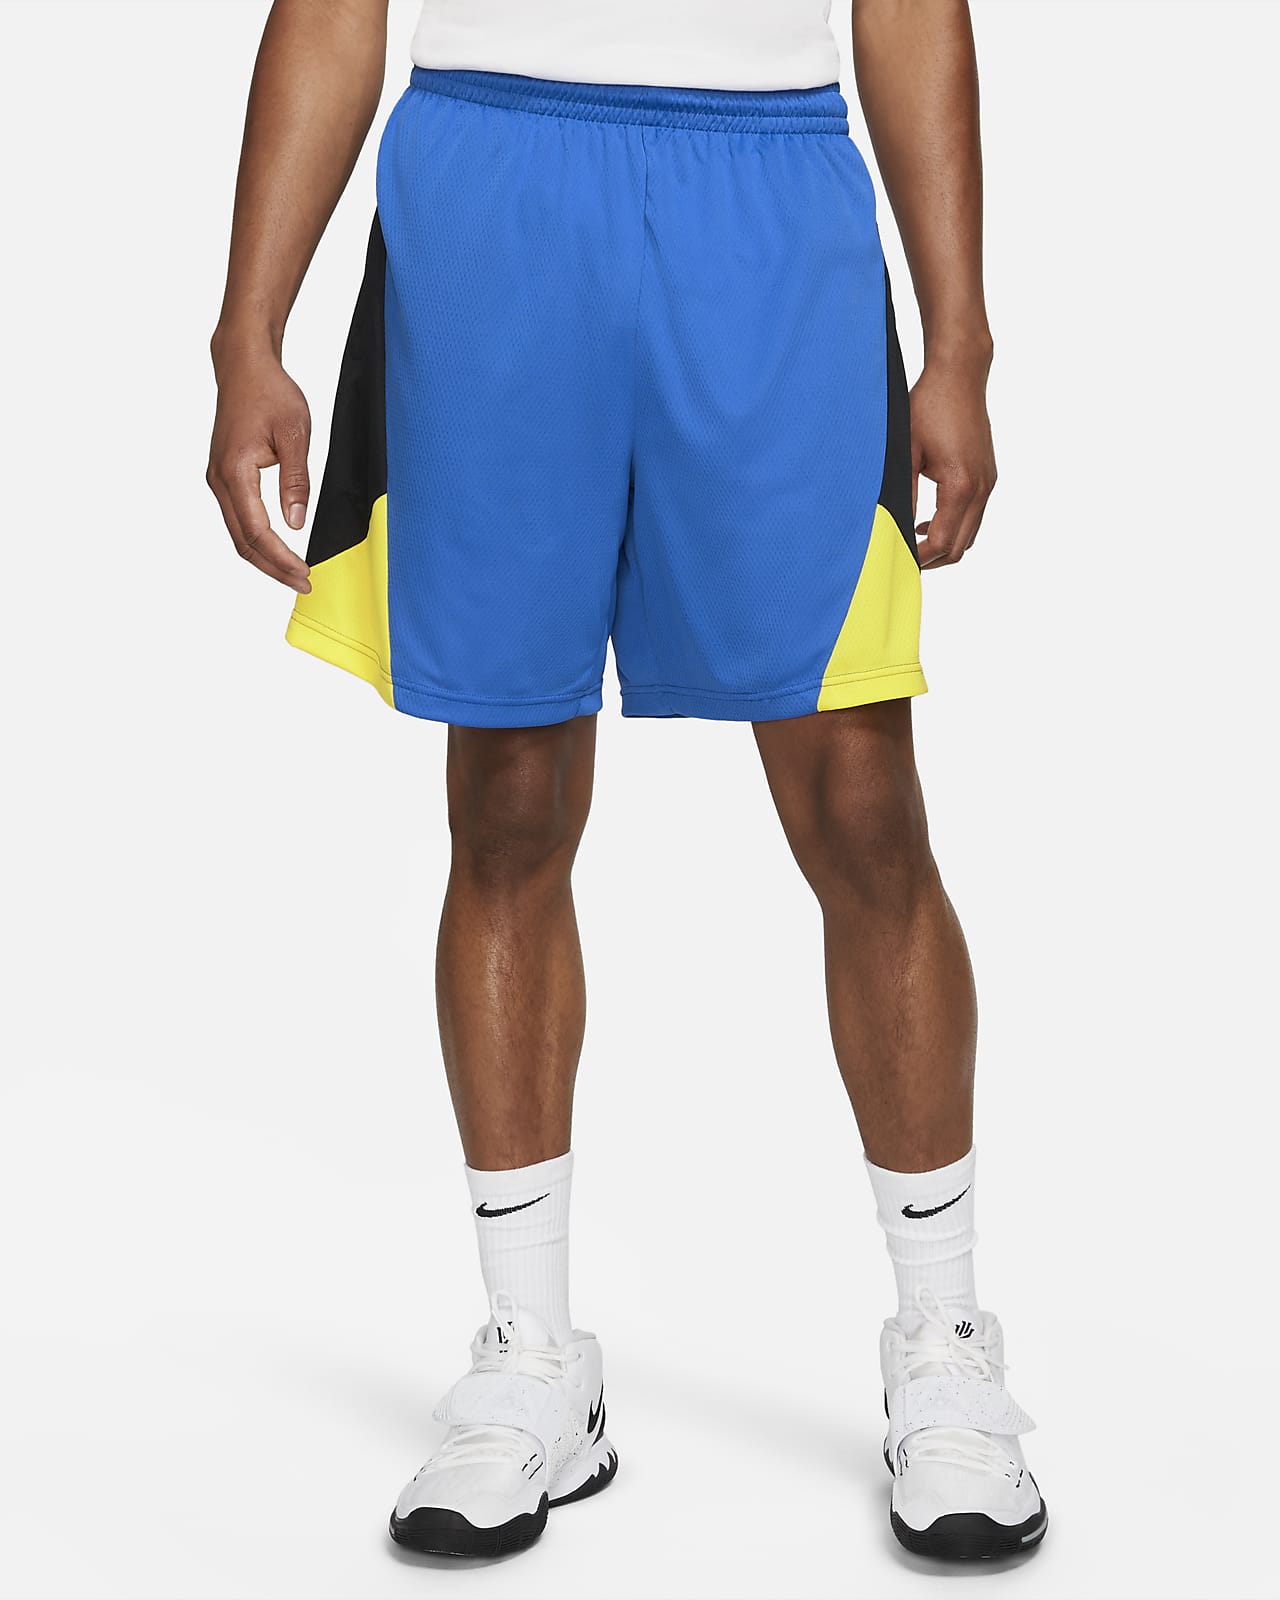 Buy > women's nike dri fit basketball shorts > in stock